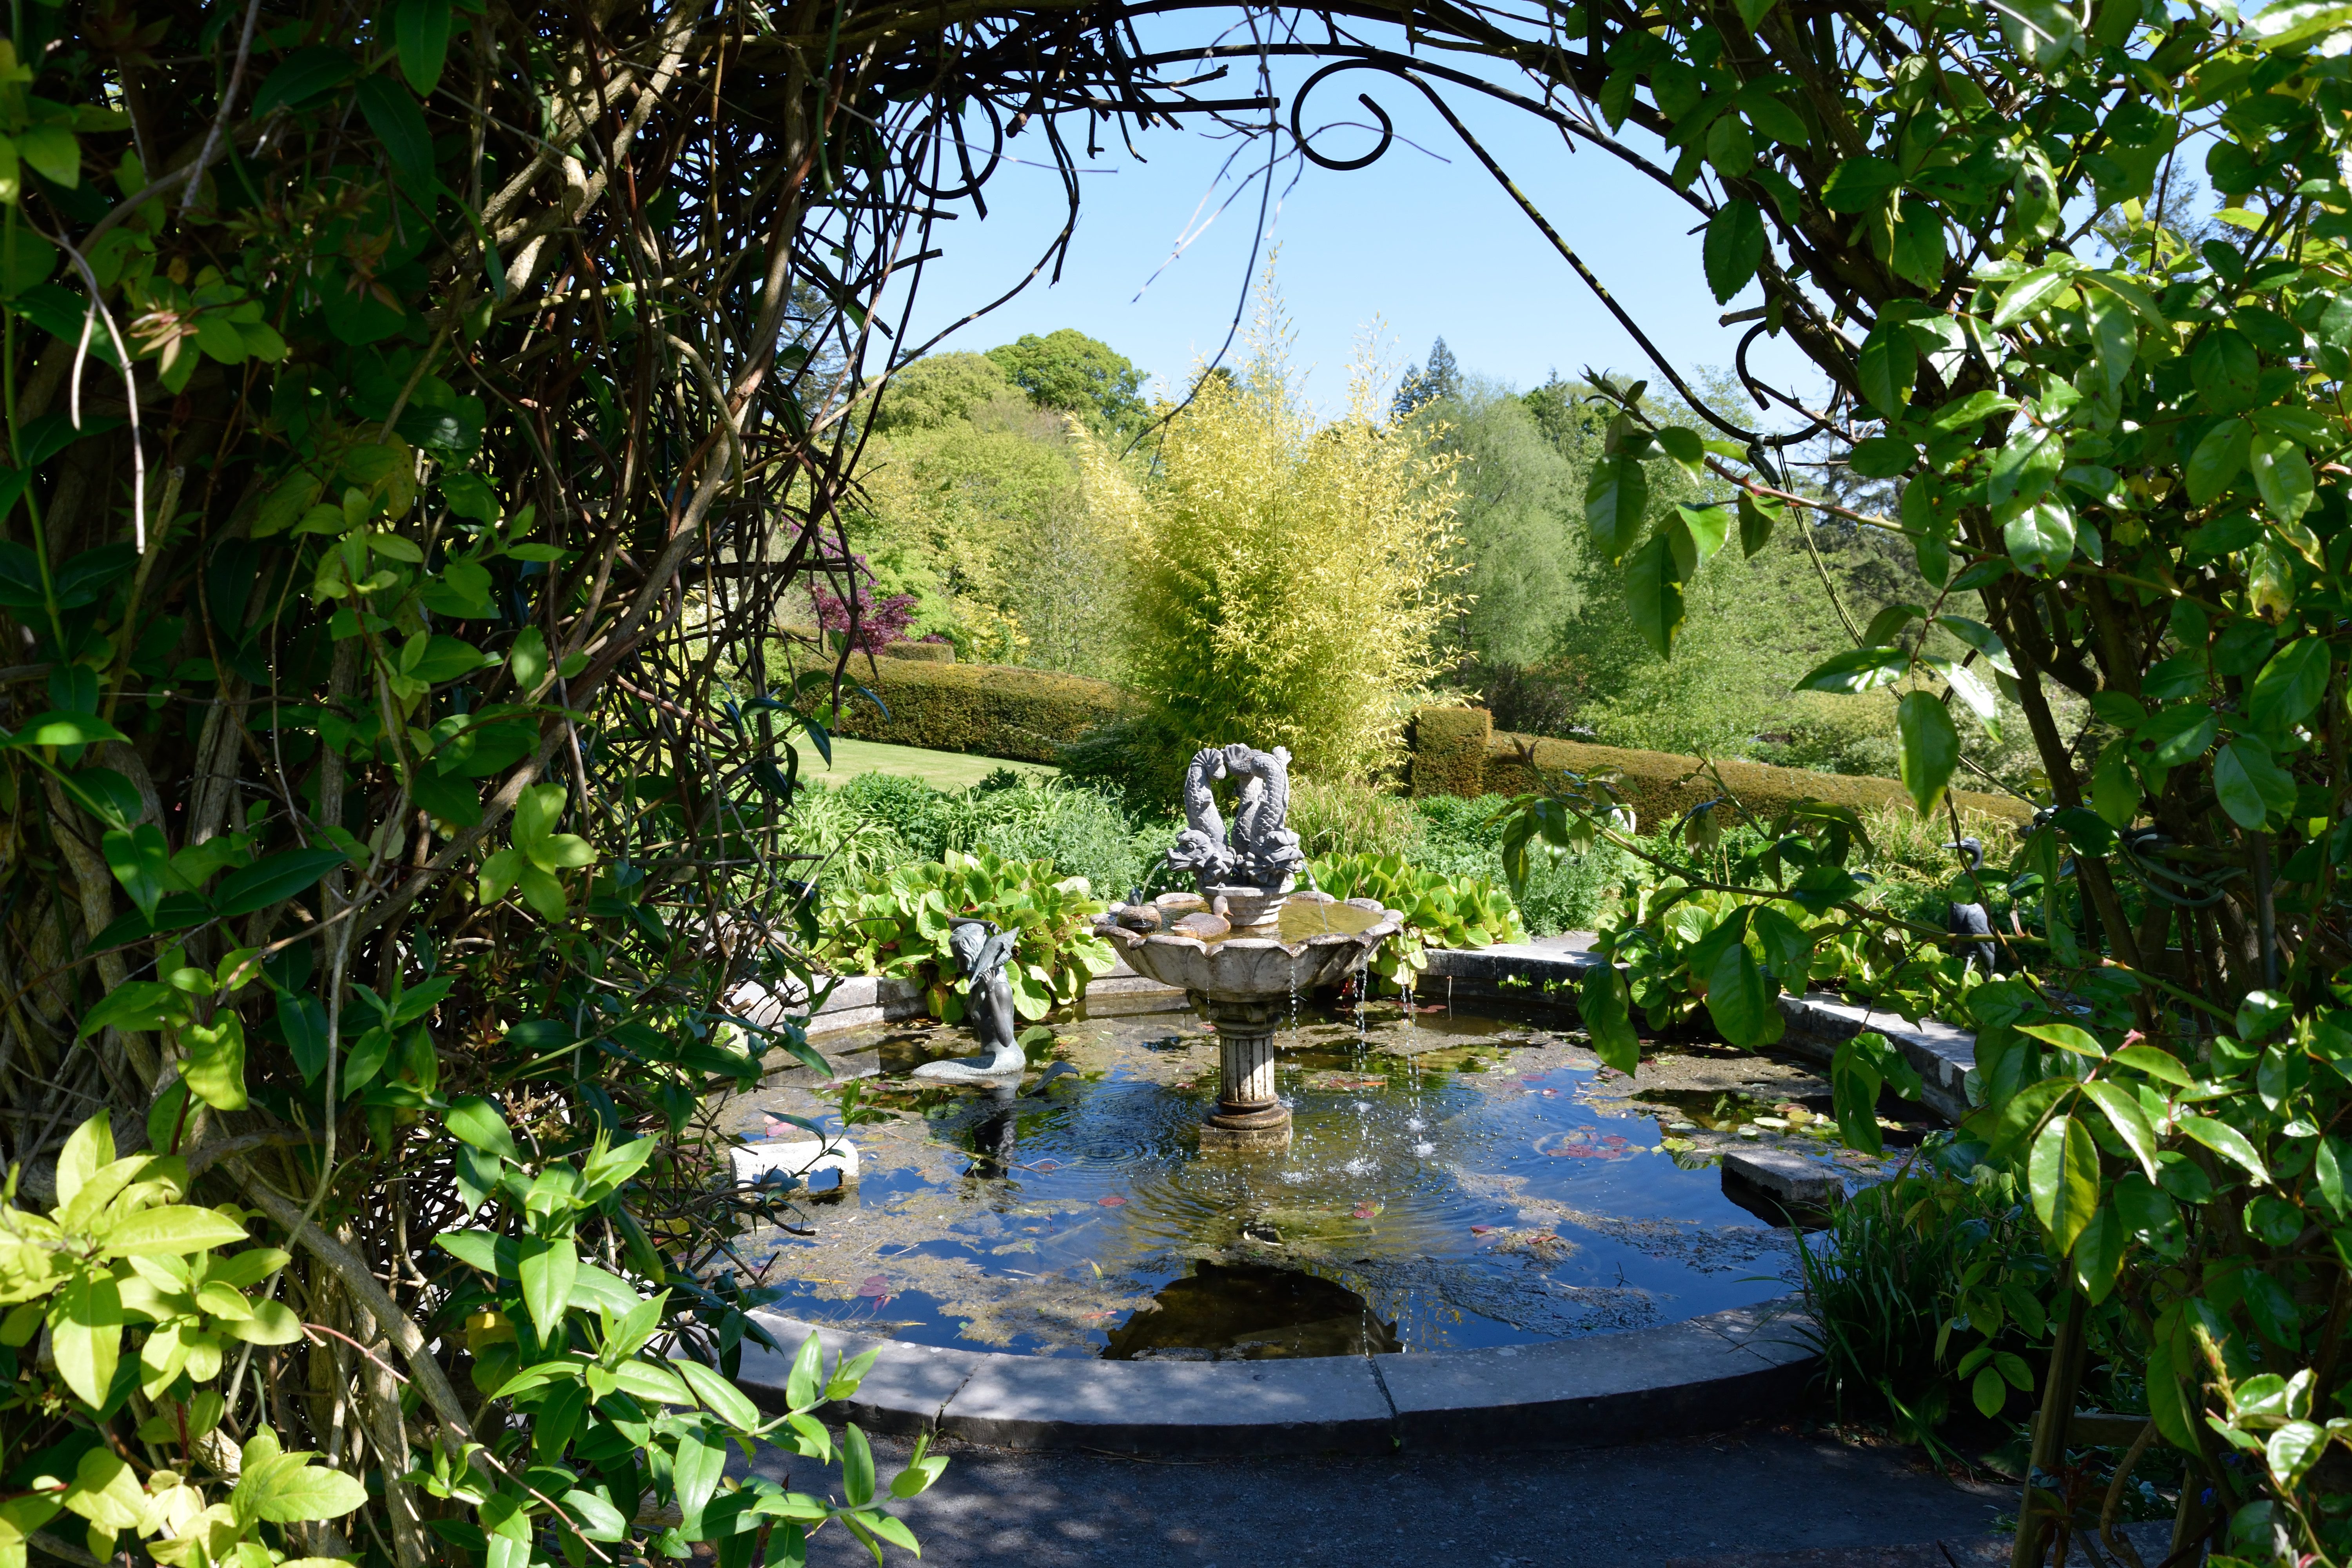 Tour of Ireland Belvedere Gardens